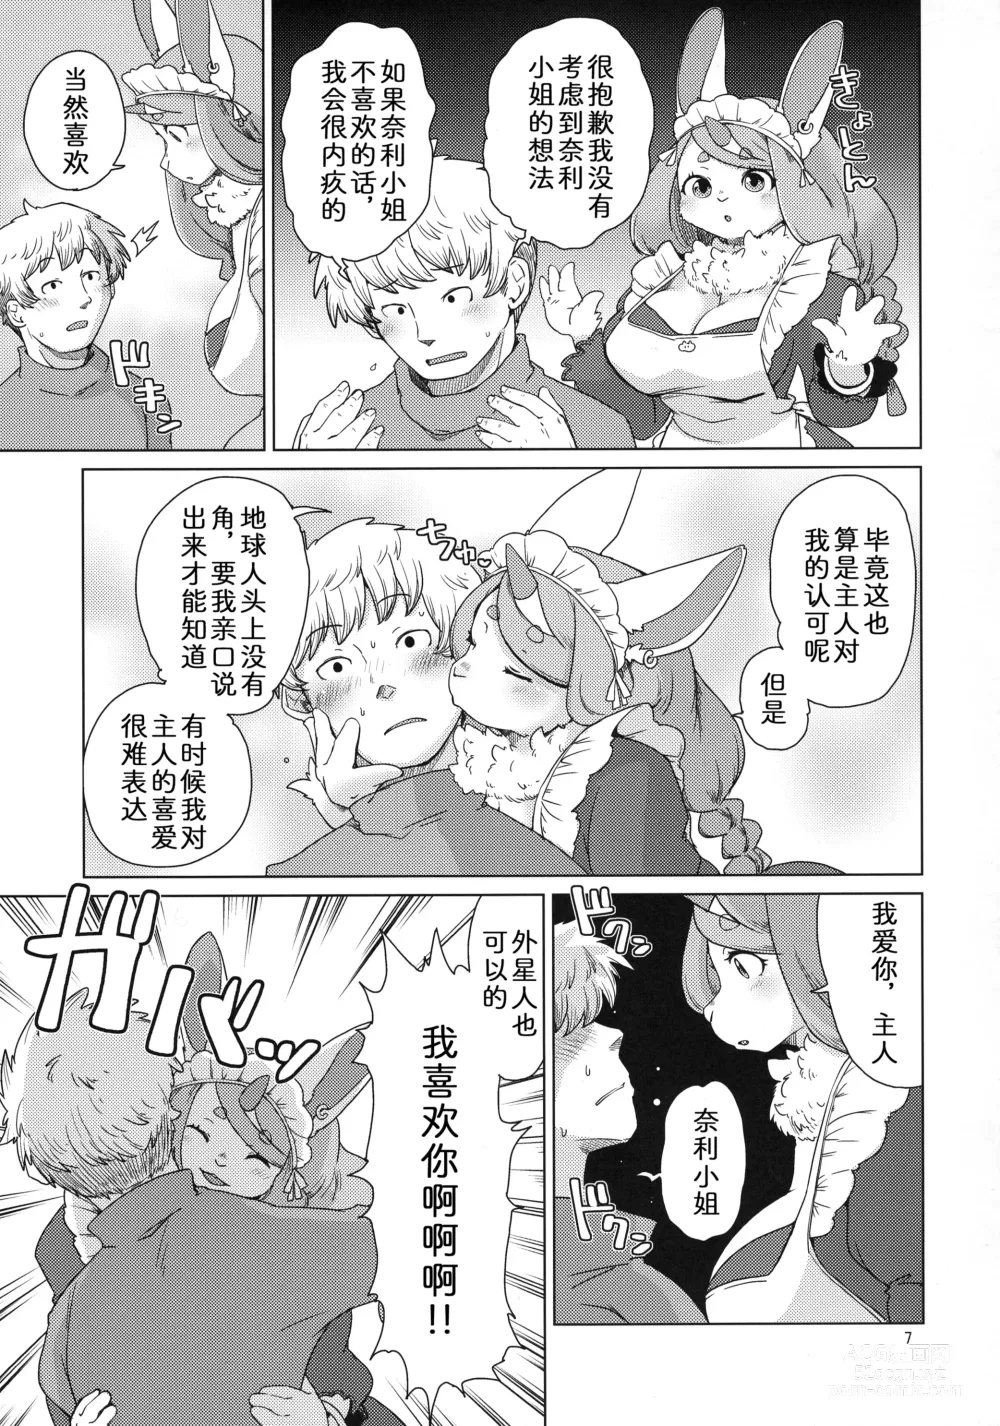 Page 7 of doujinshi 毛茸茸大入侵